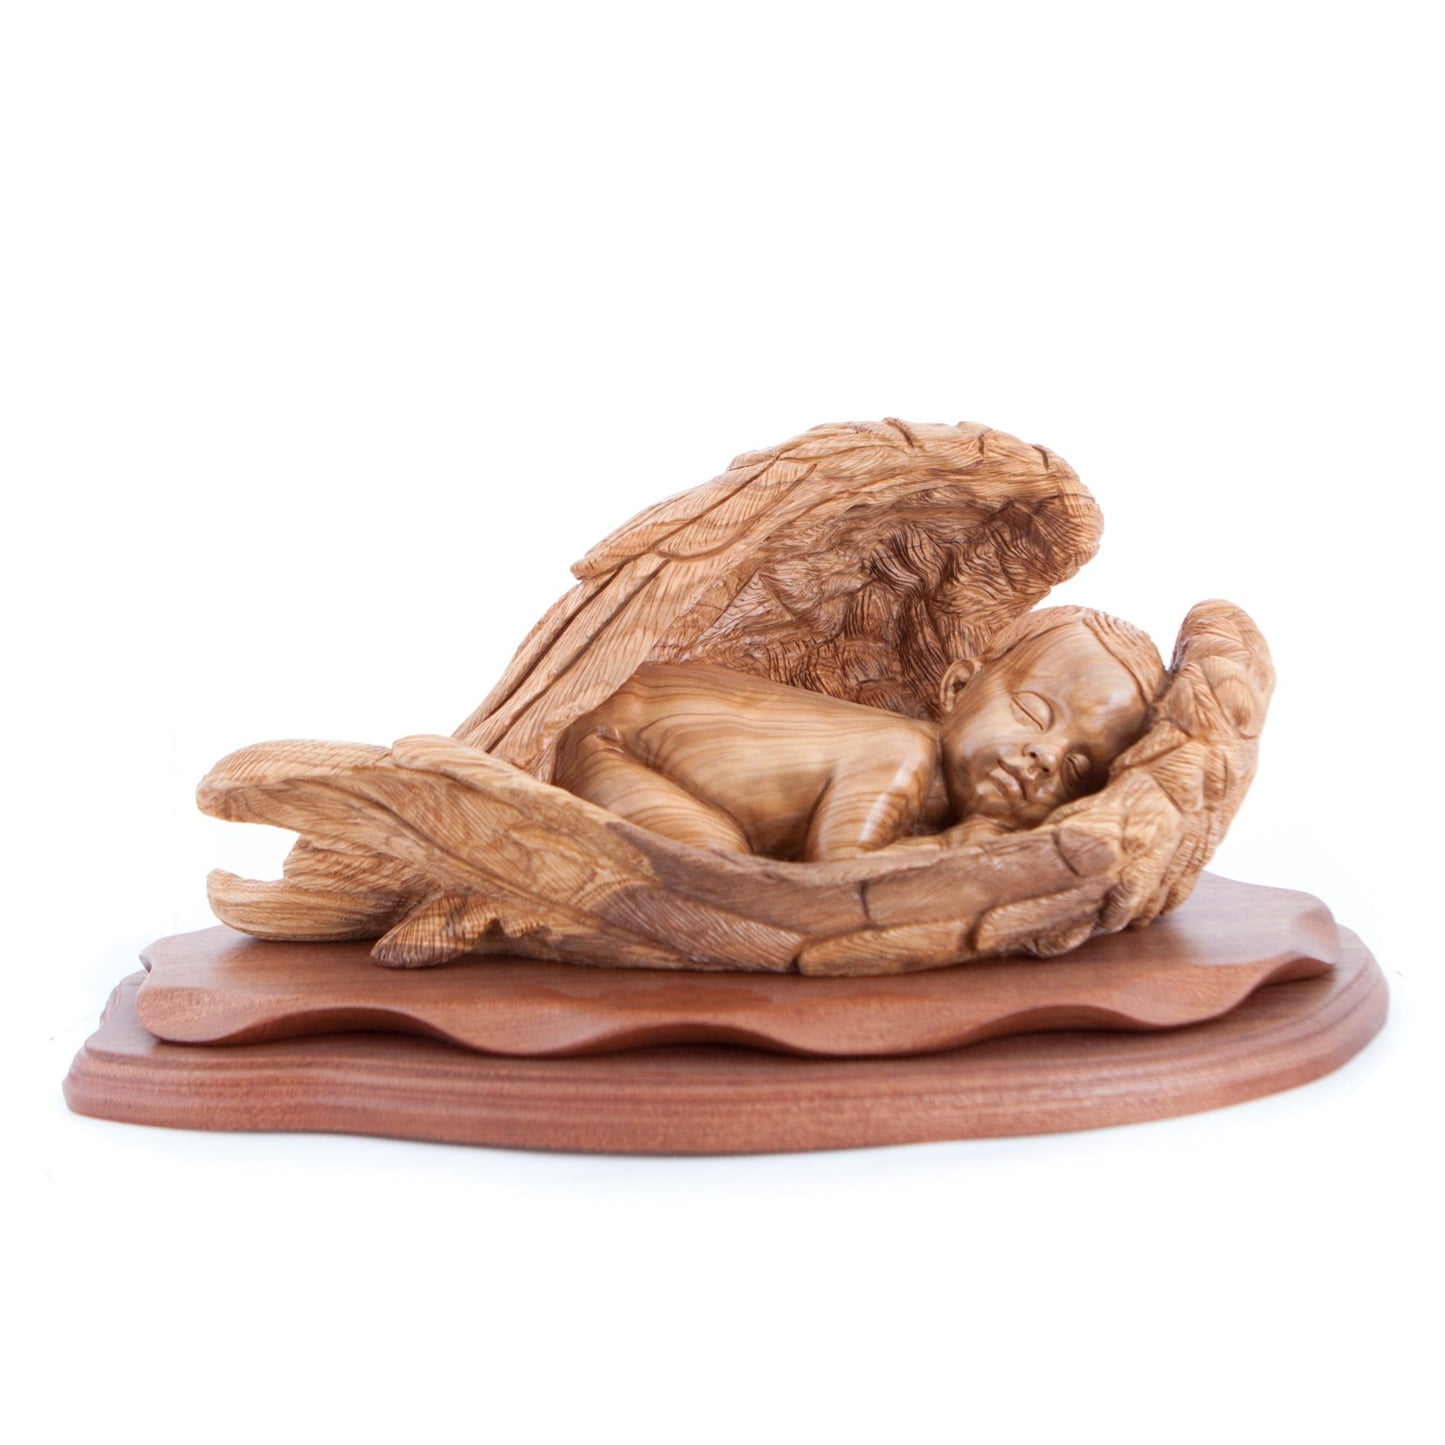 Sleeping Baby Jesus Angel with Wings 17.5", Wooden Carving